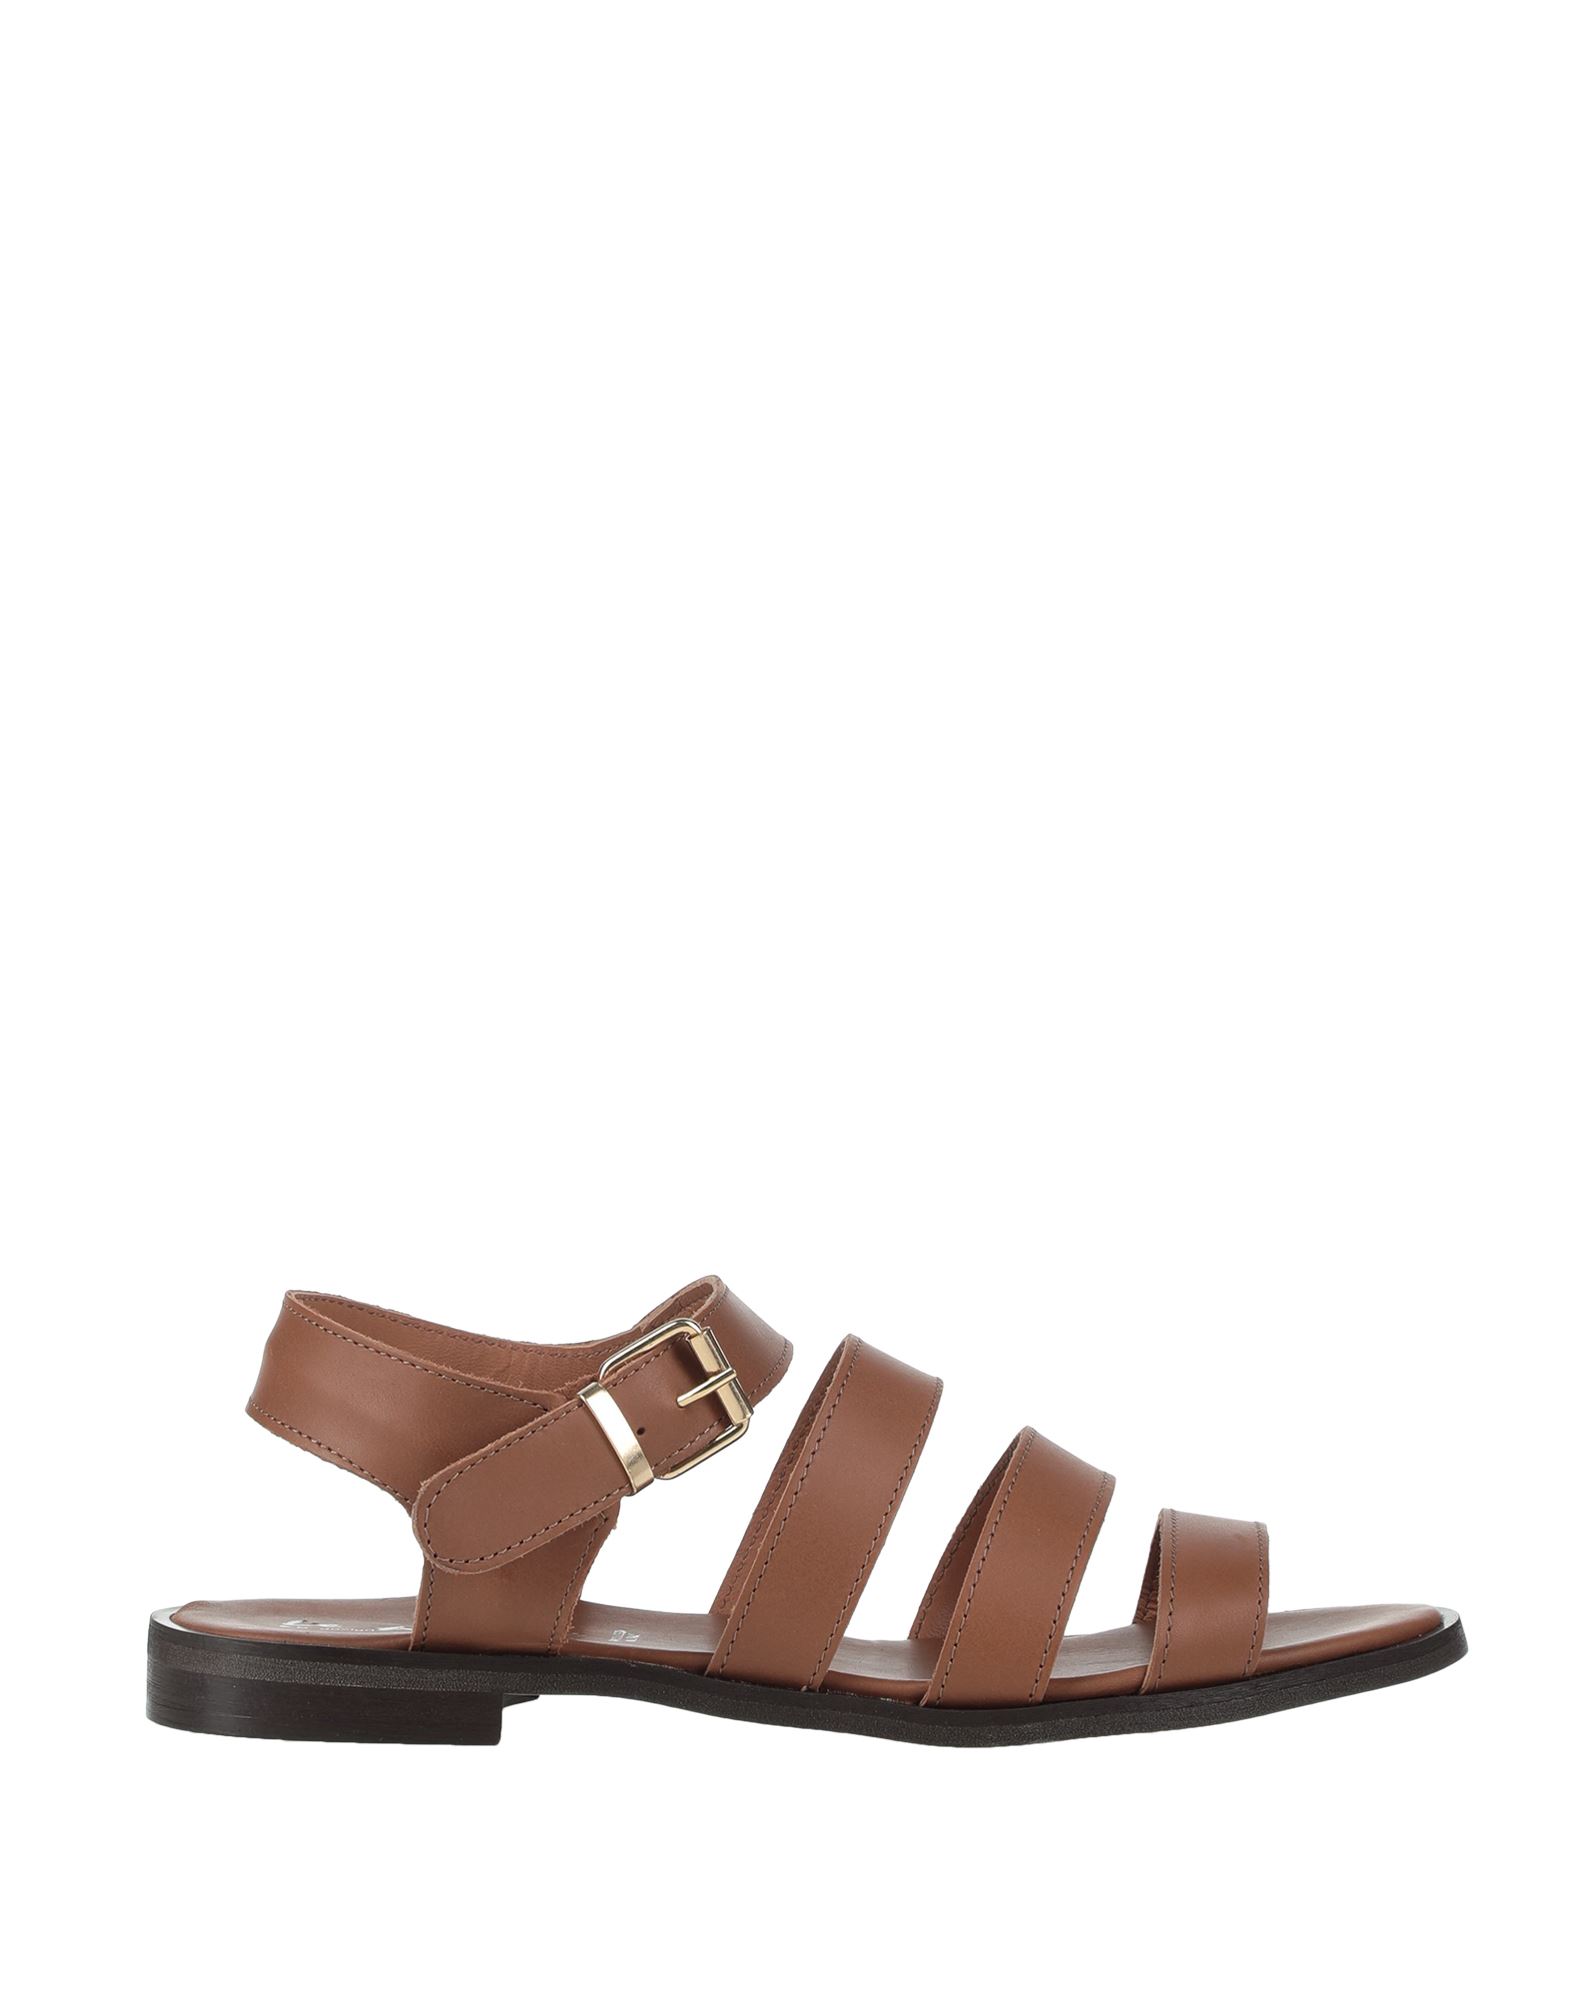 Le Pepite Sandals In Brown